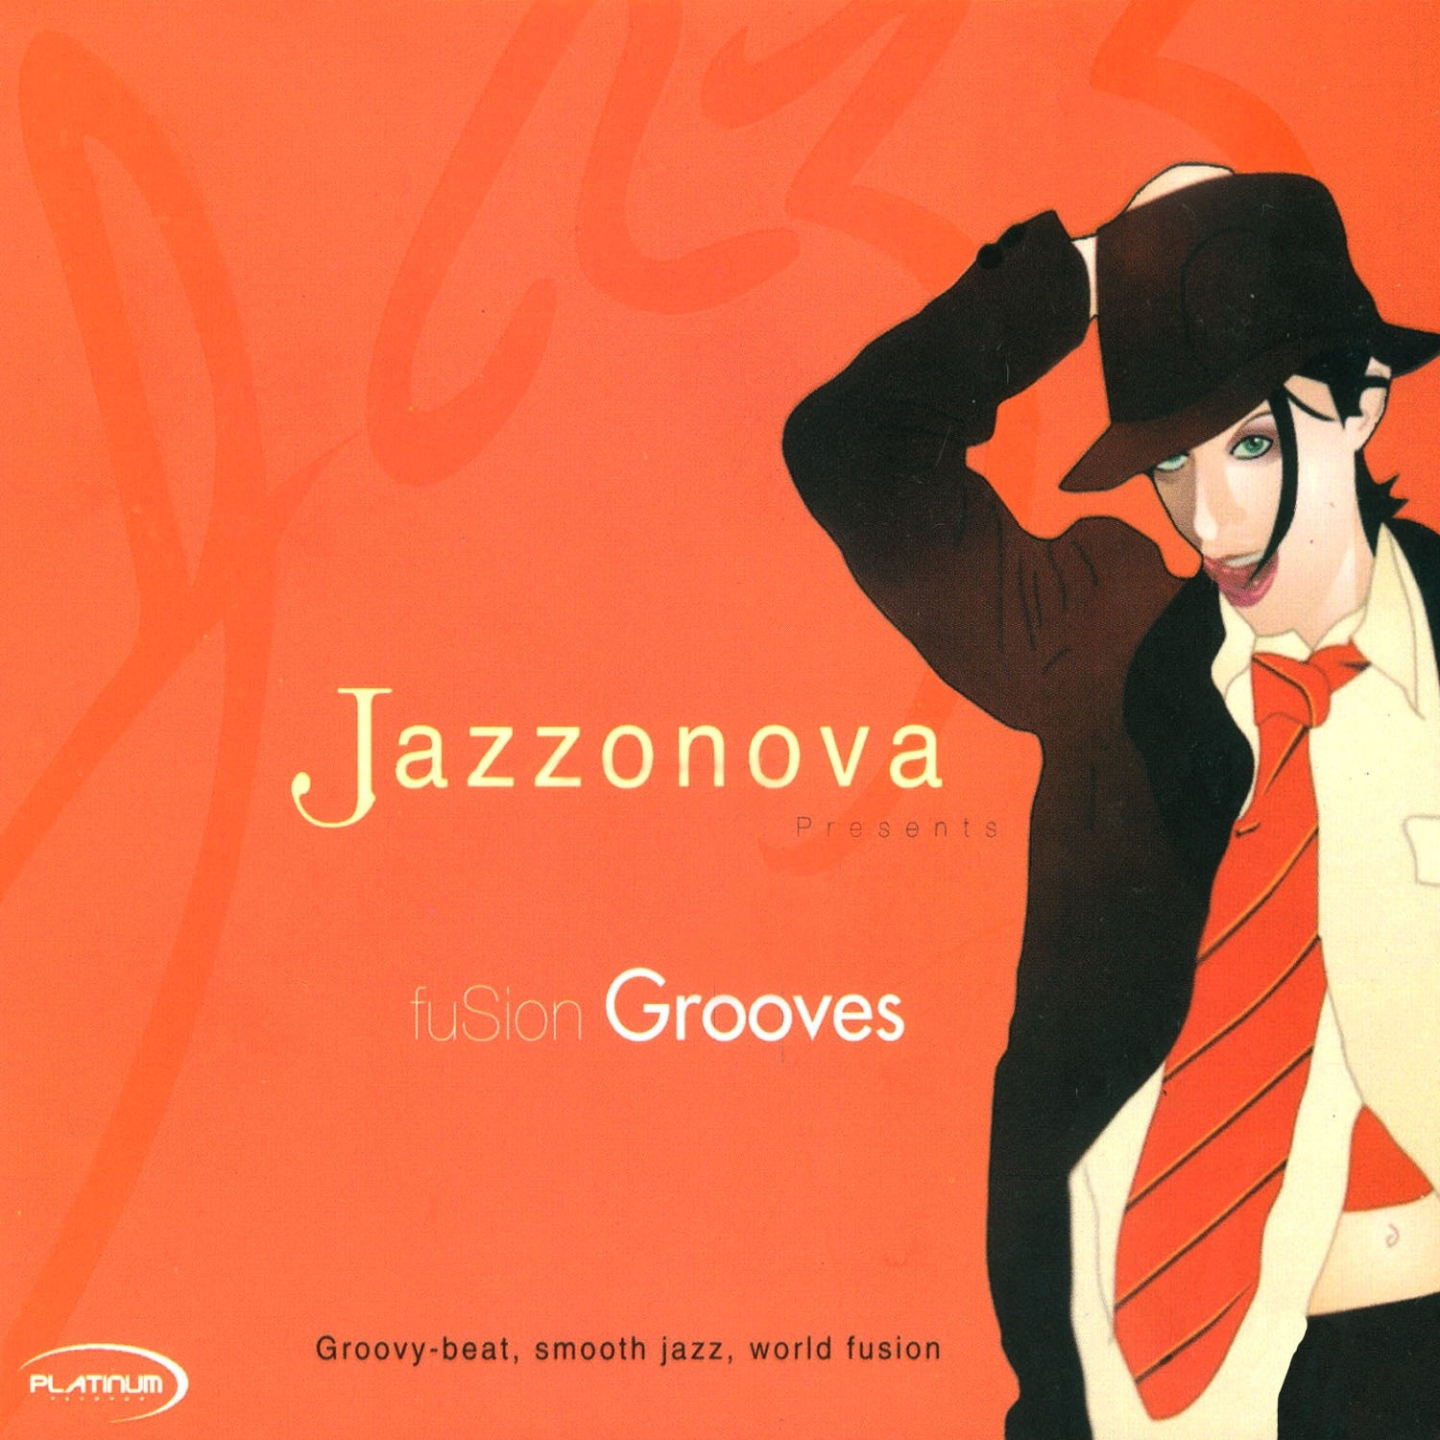 Jazzonova: Fusion Grooves